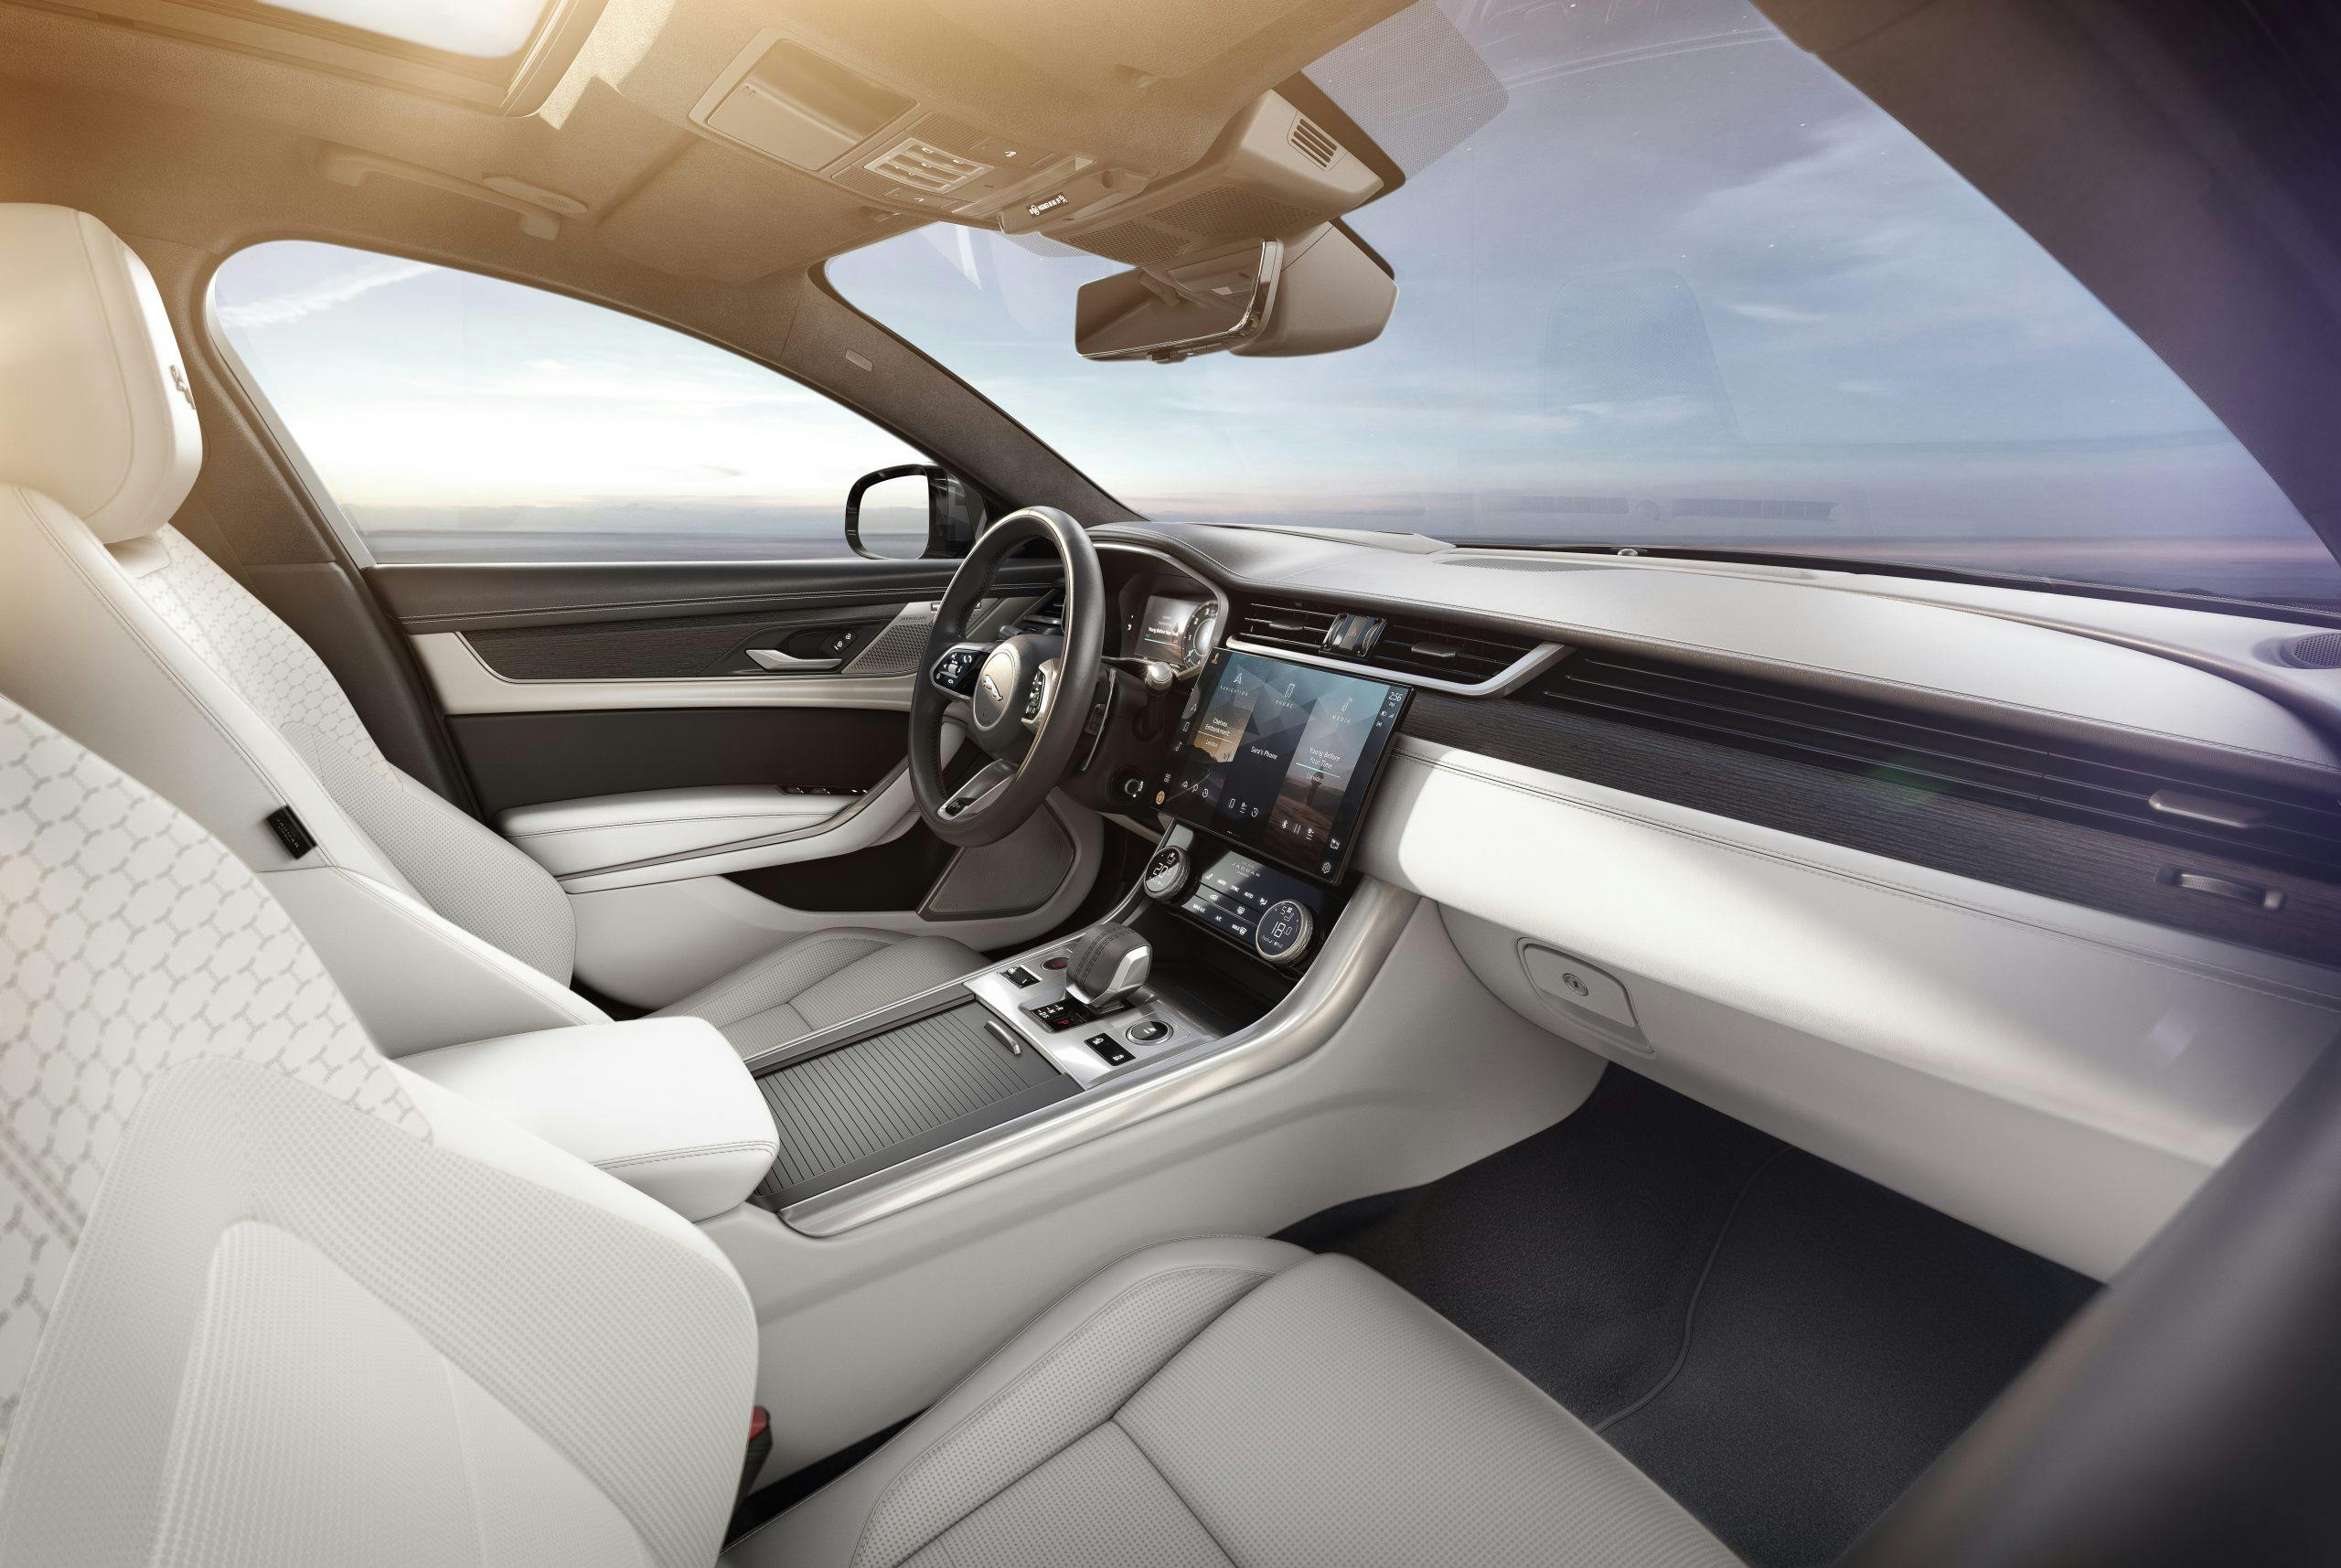 202021 Jaguar XF interior